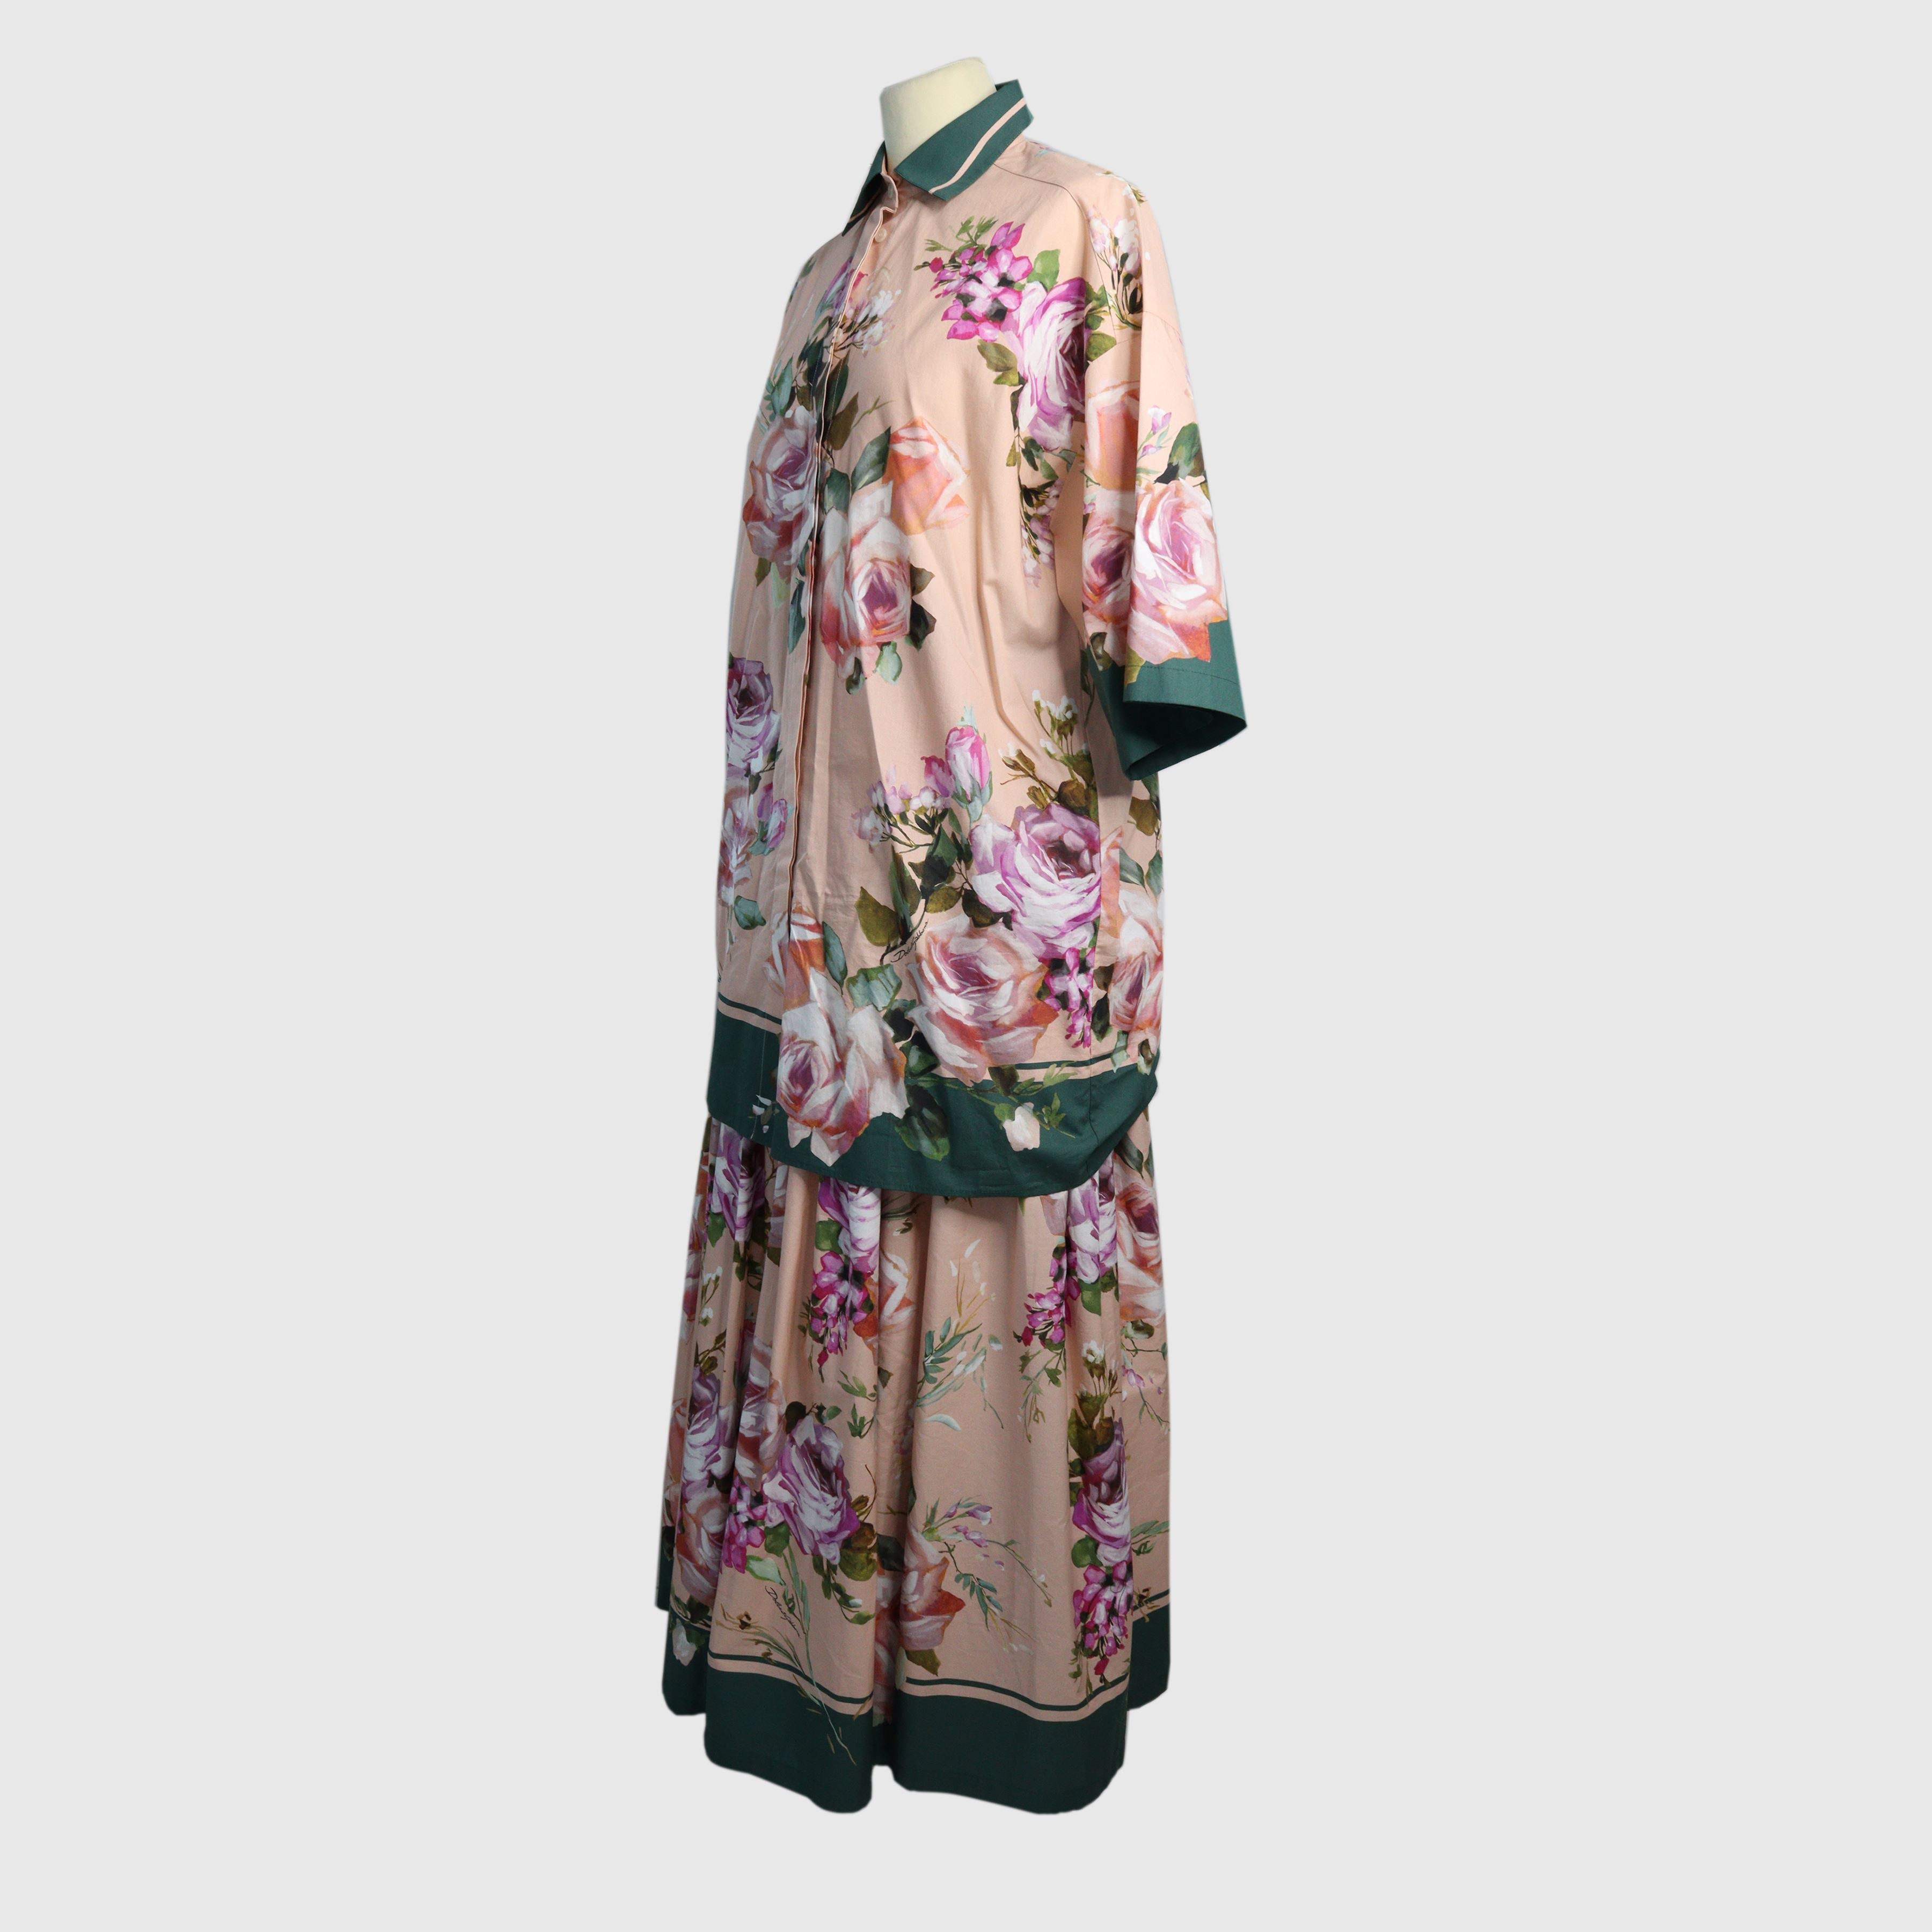 Multicolor Floral Print Top & Skirt Set Clothing Dolce & Gabbana 